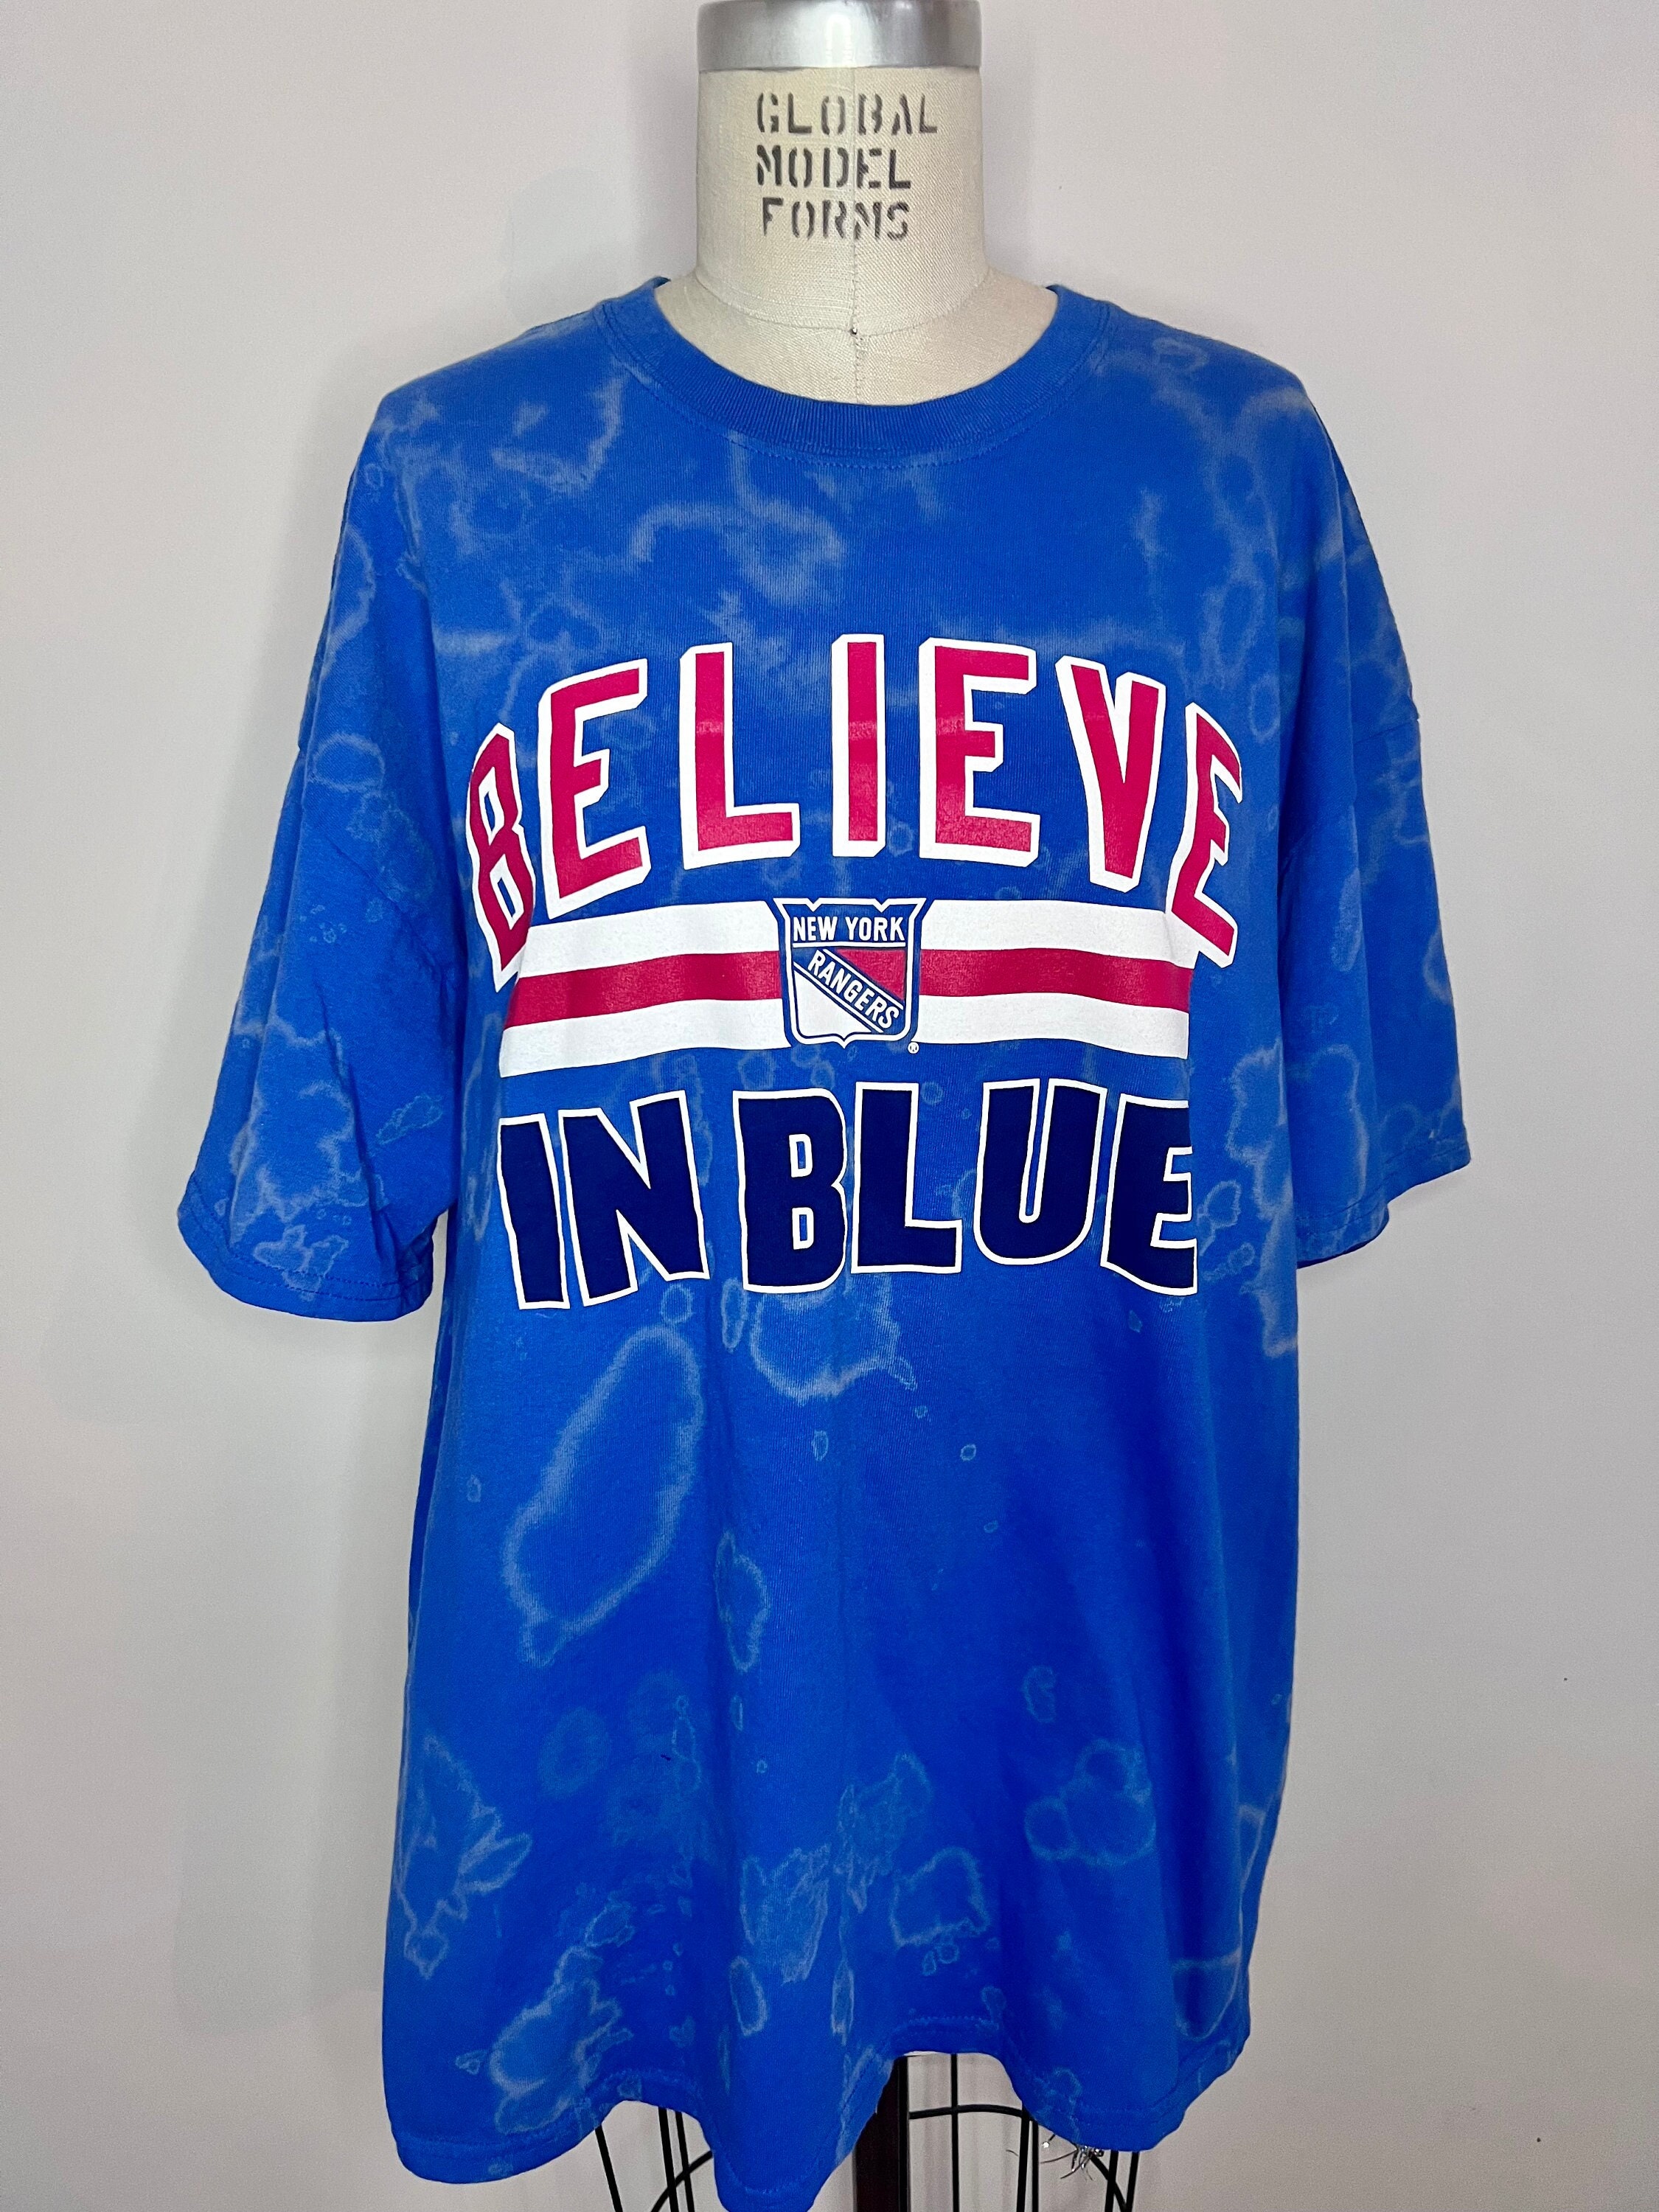 Starter Womens New York Rangers Graphic T-Shirt, Blue, Medium